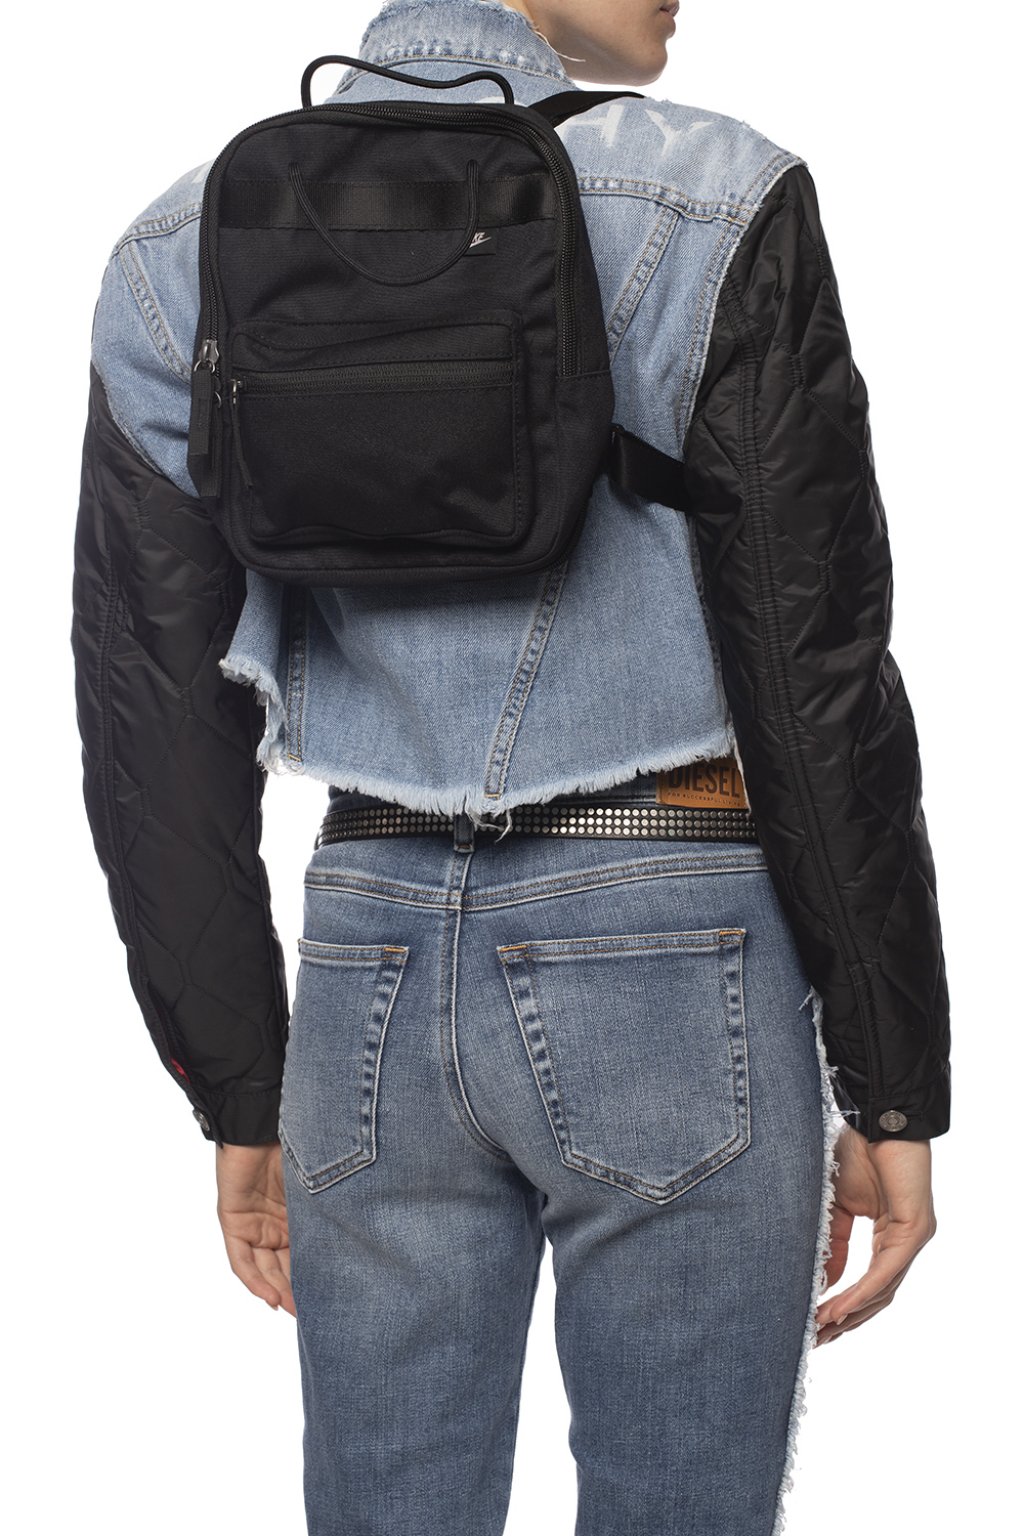 nike tanjun backpack black